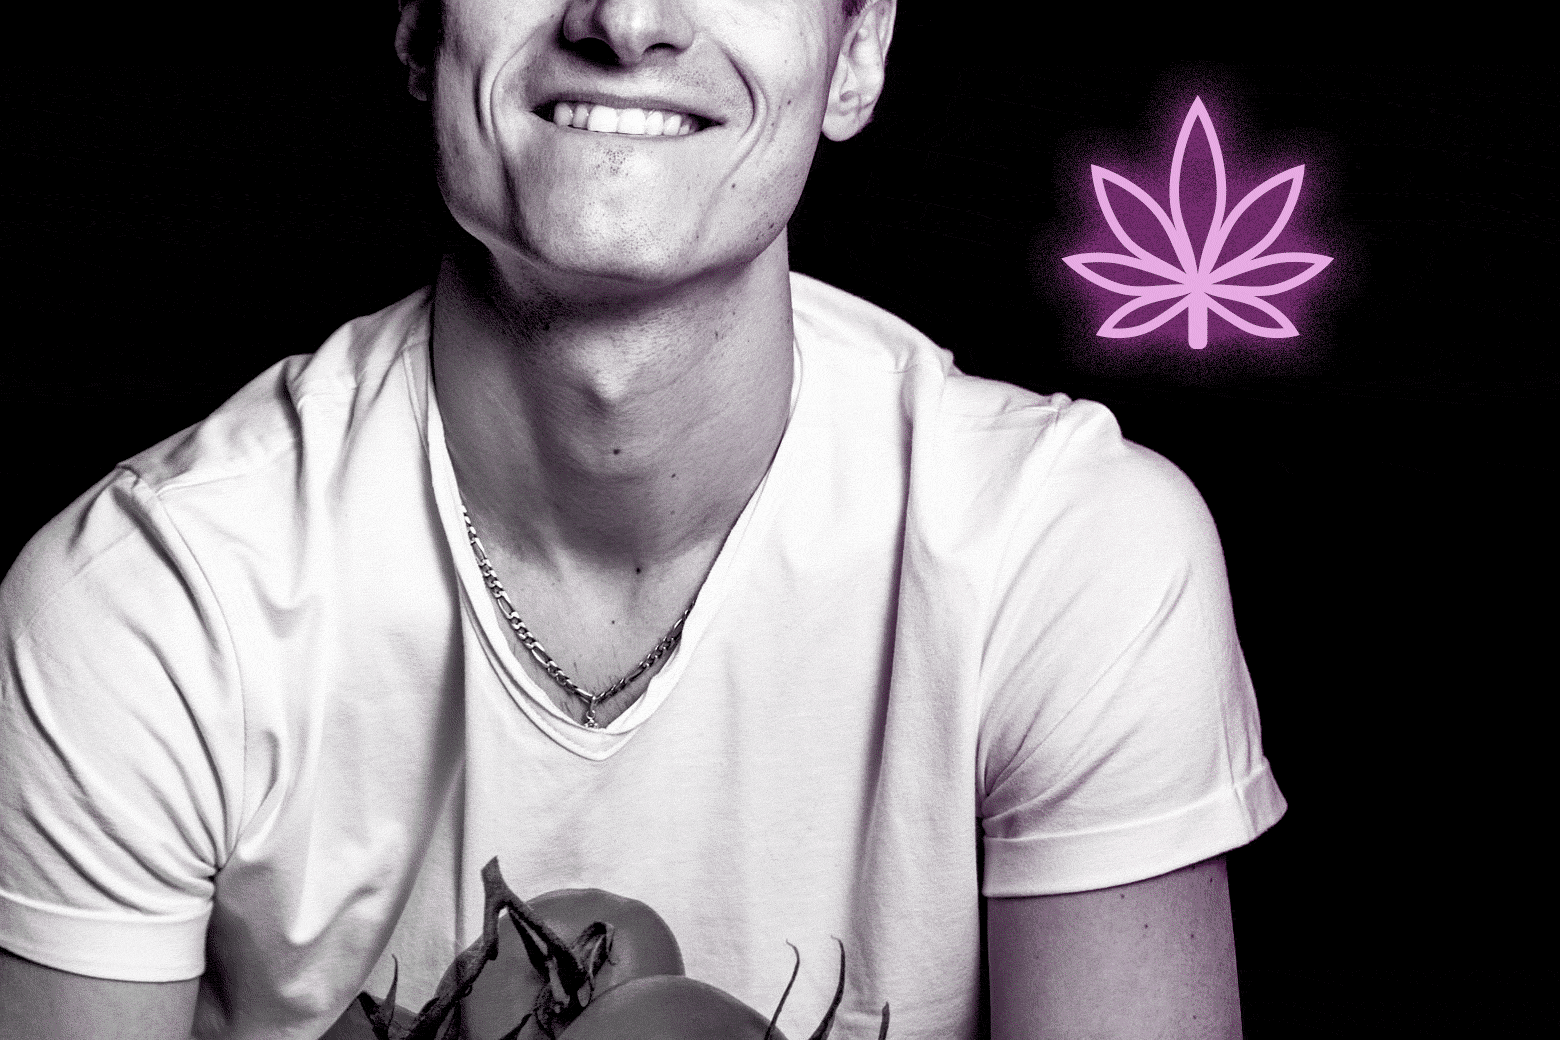 Man smiling, with illustration of a marijuana leaf.